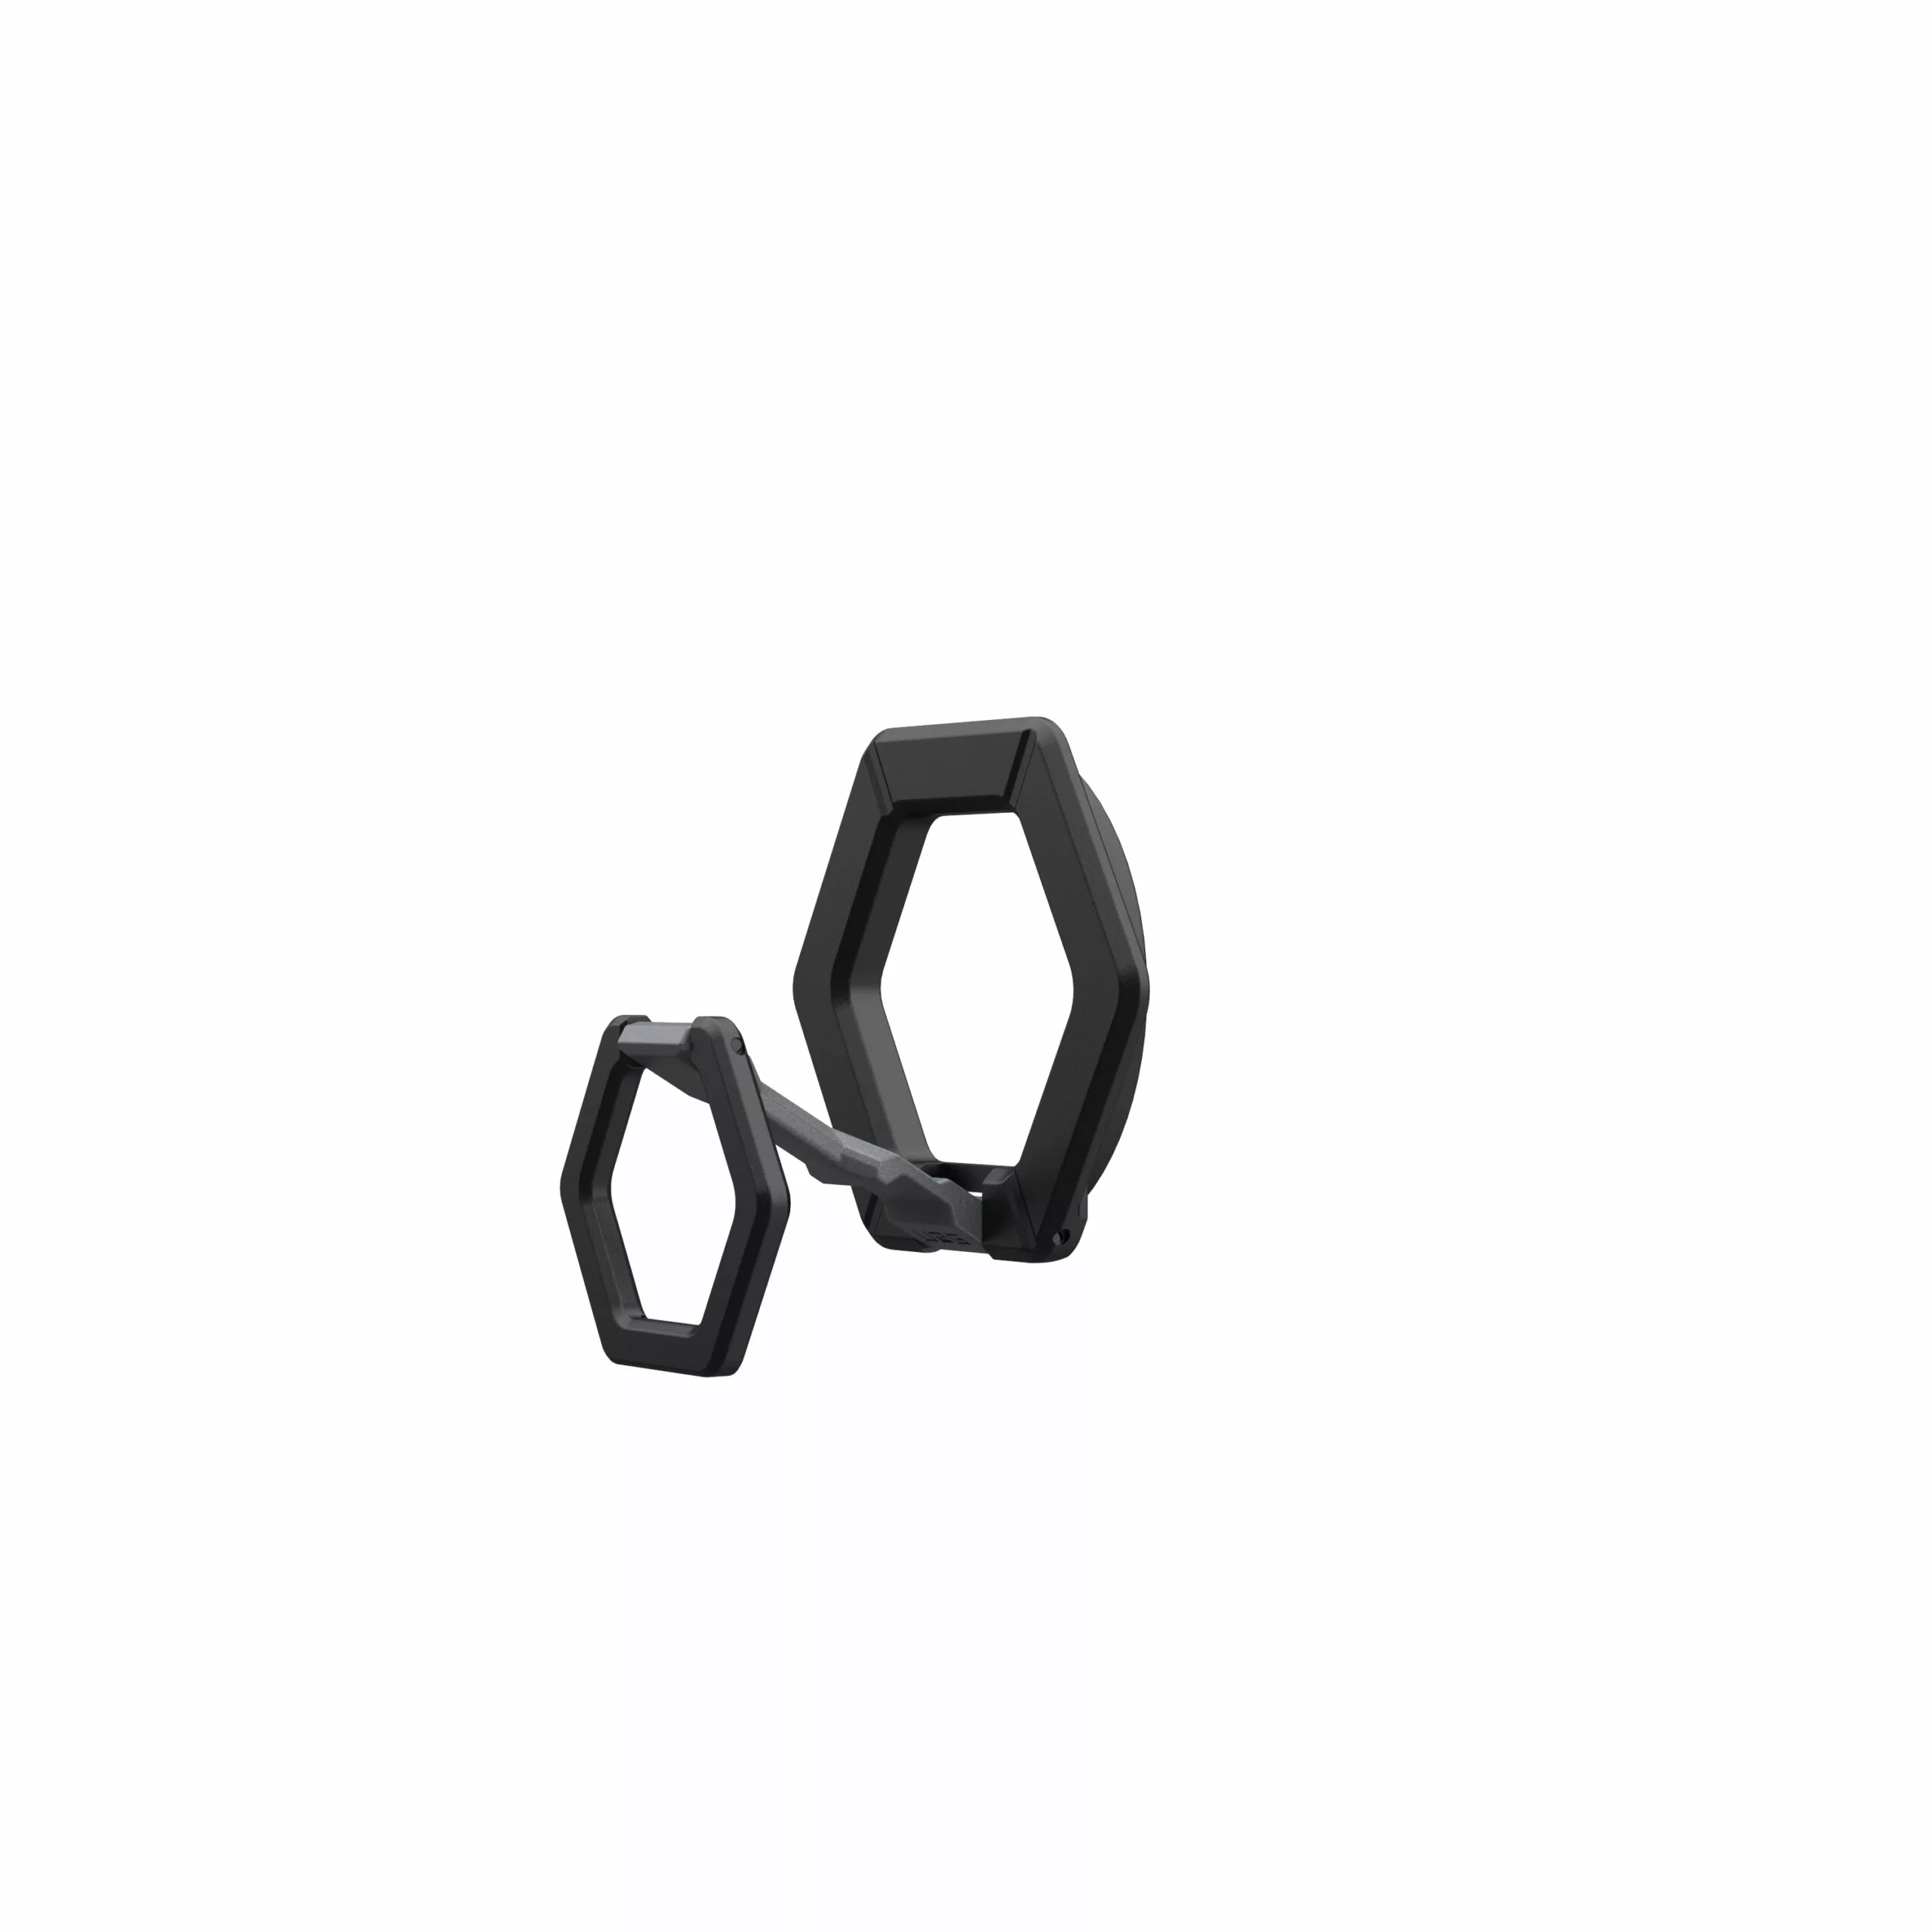 UAG รุ่น Magnetic Ring Stand - ขาตั้งแหวนแม่เหล็ก - สี Black/Silver